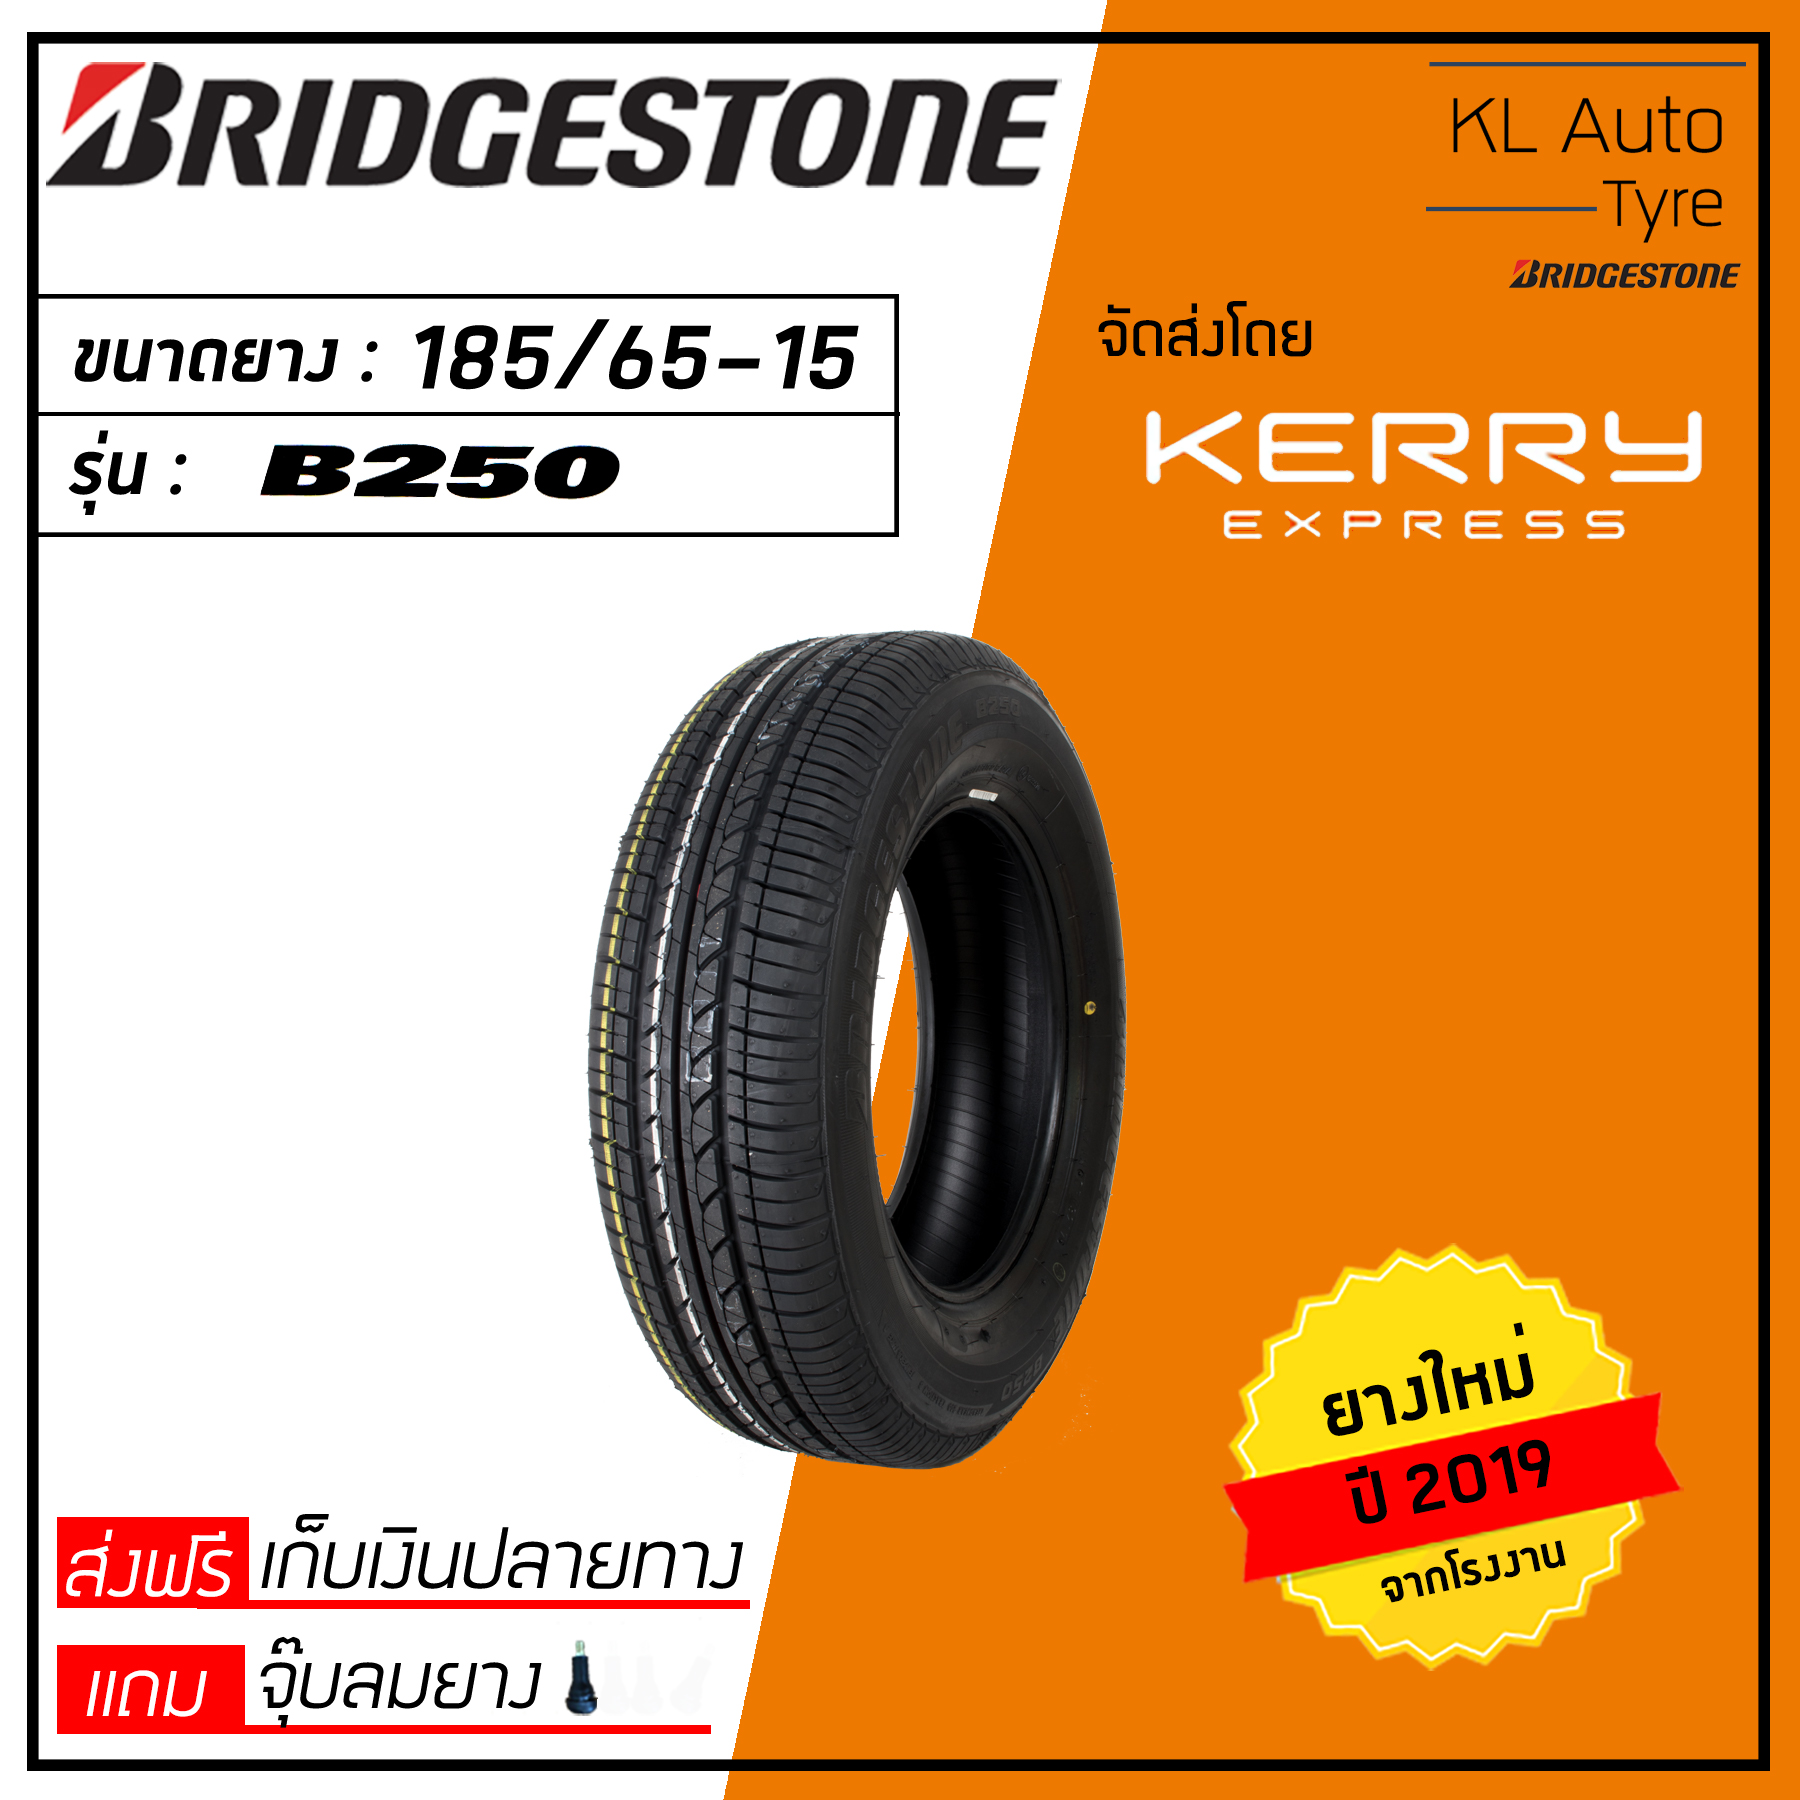 Bridgestone 185/65-15 B250 1 เส้น ปี 19 (ฟรี จุ๊บยาง 1 ตัว มูลค่า 50 บาท)